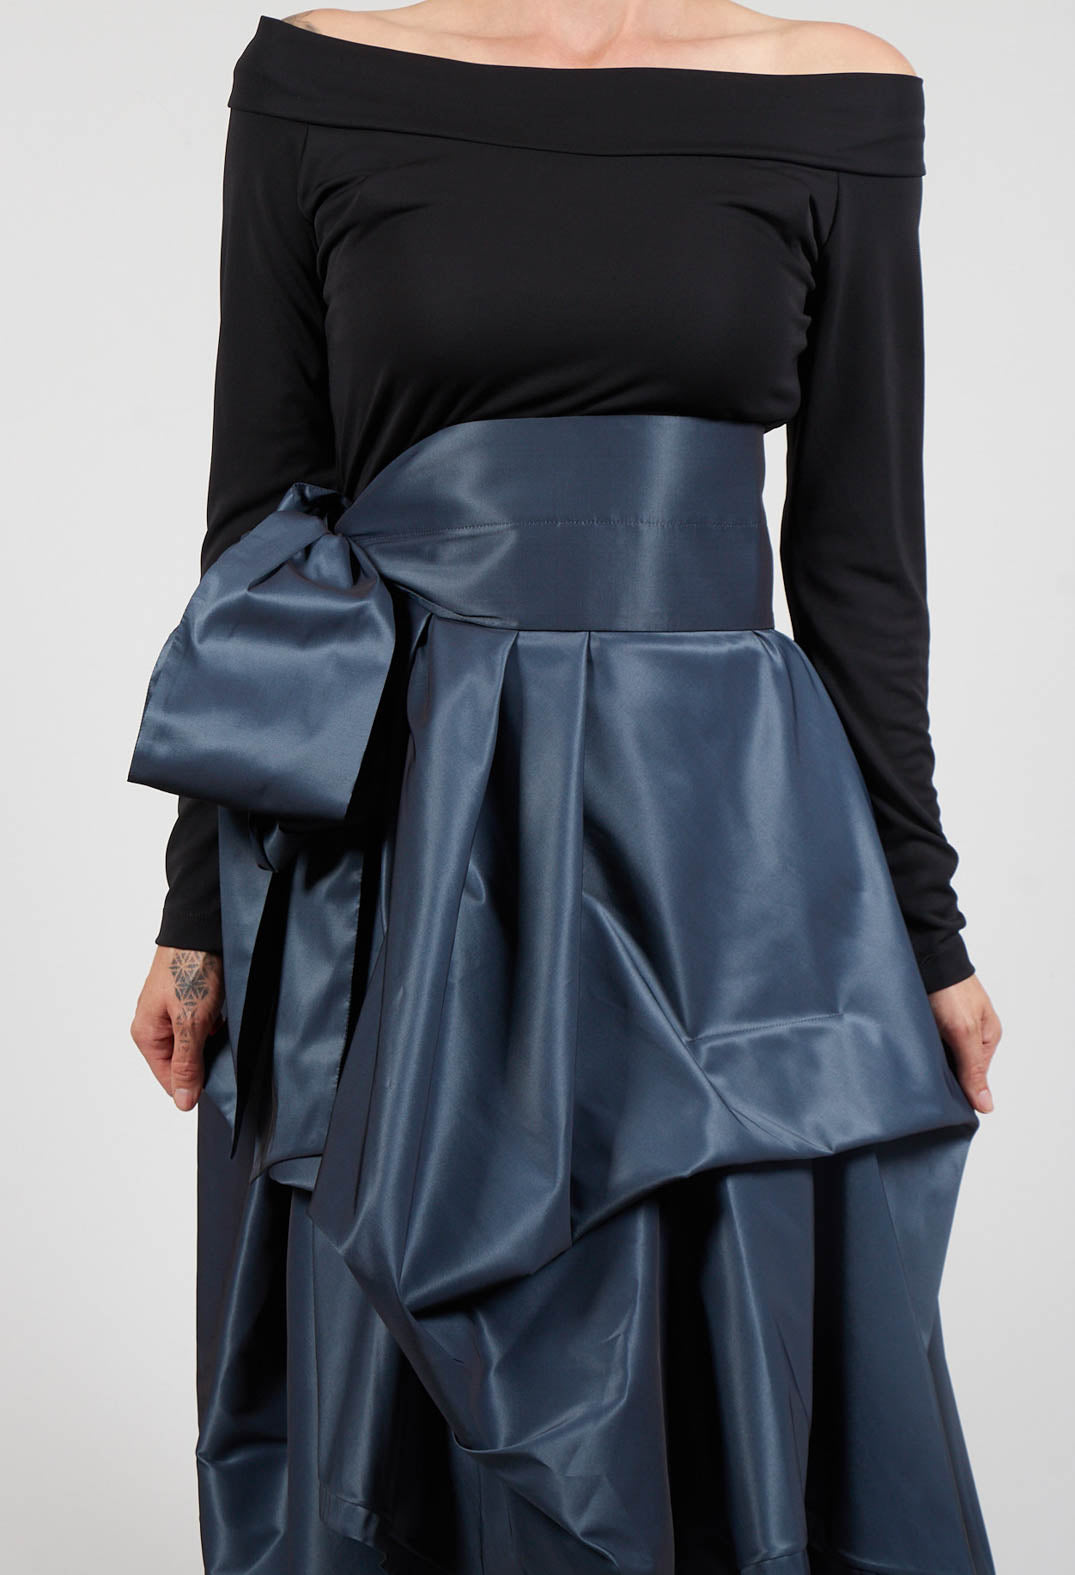 Dress Ftic9 In Black Grey Blue